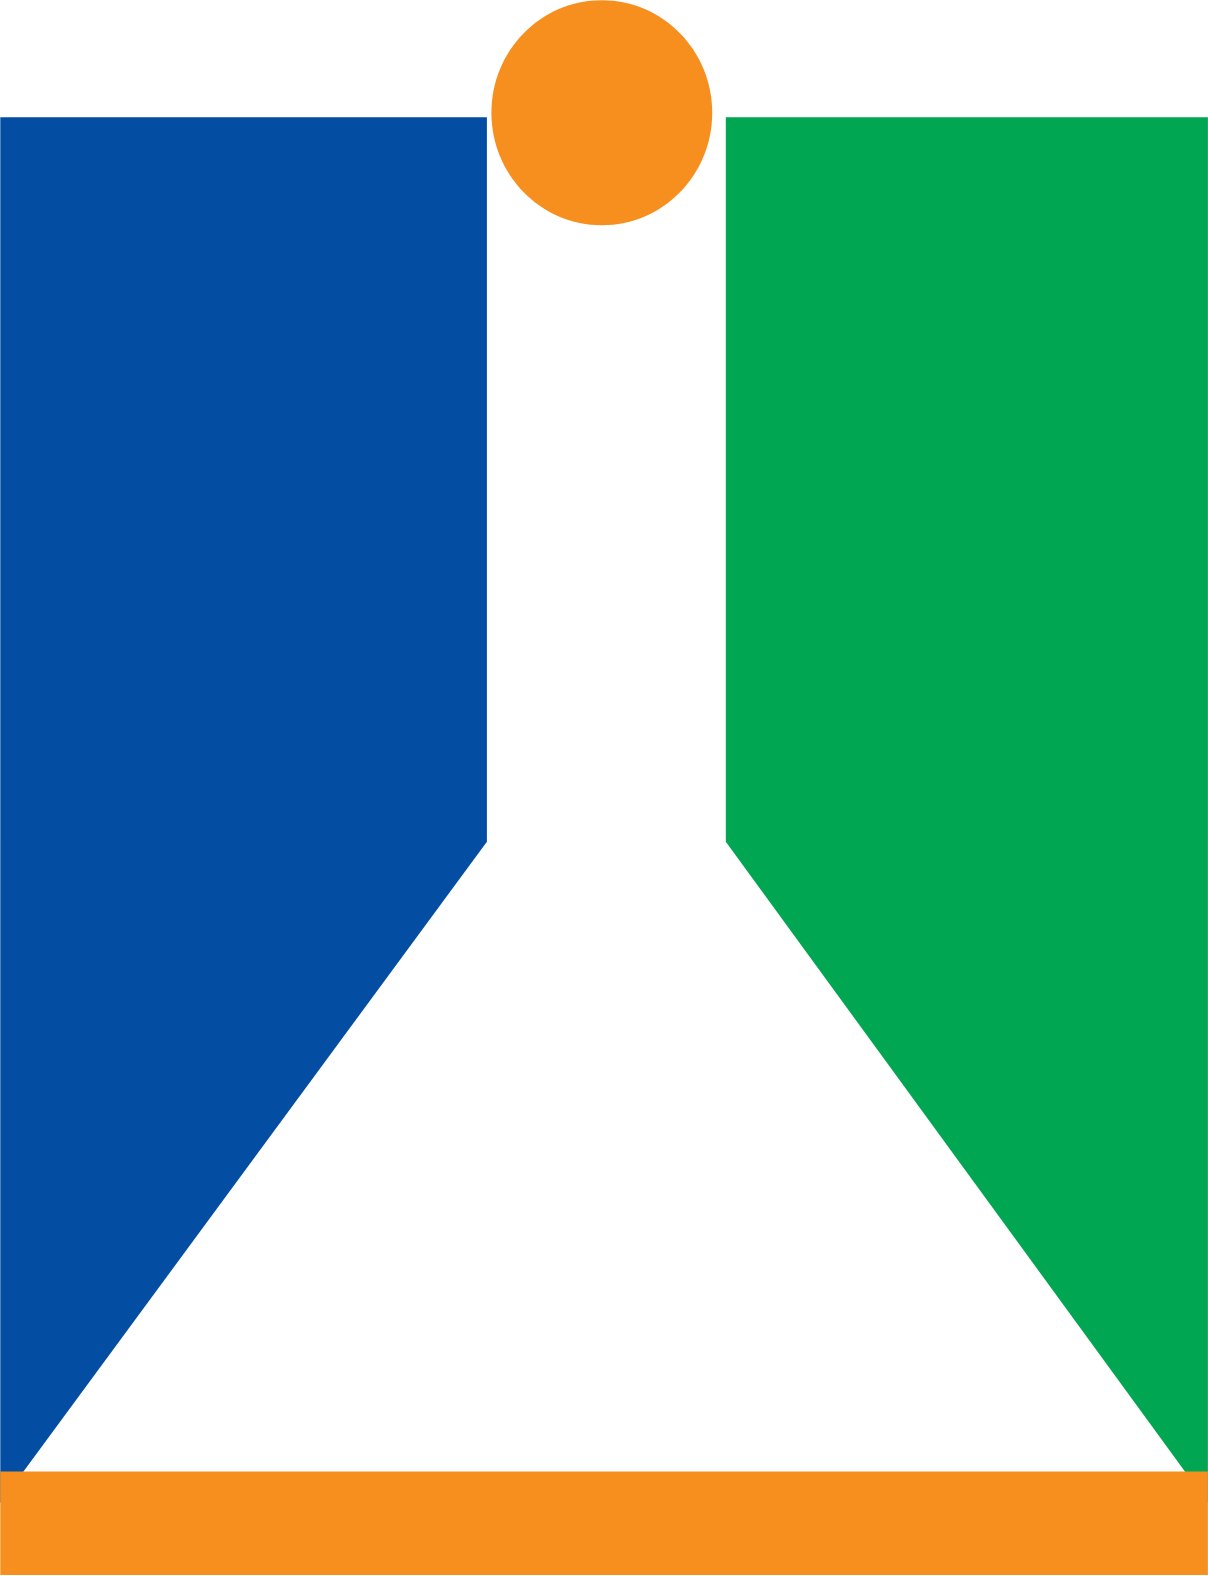 Jamjoom Pharmaceuticals Factory Company logo (PNG transparent)